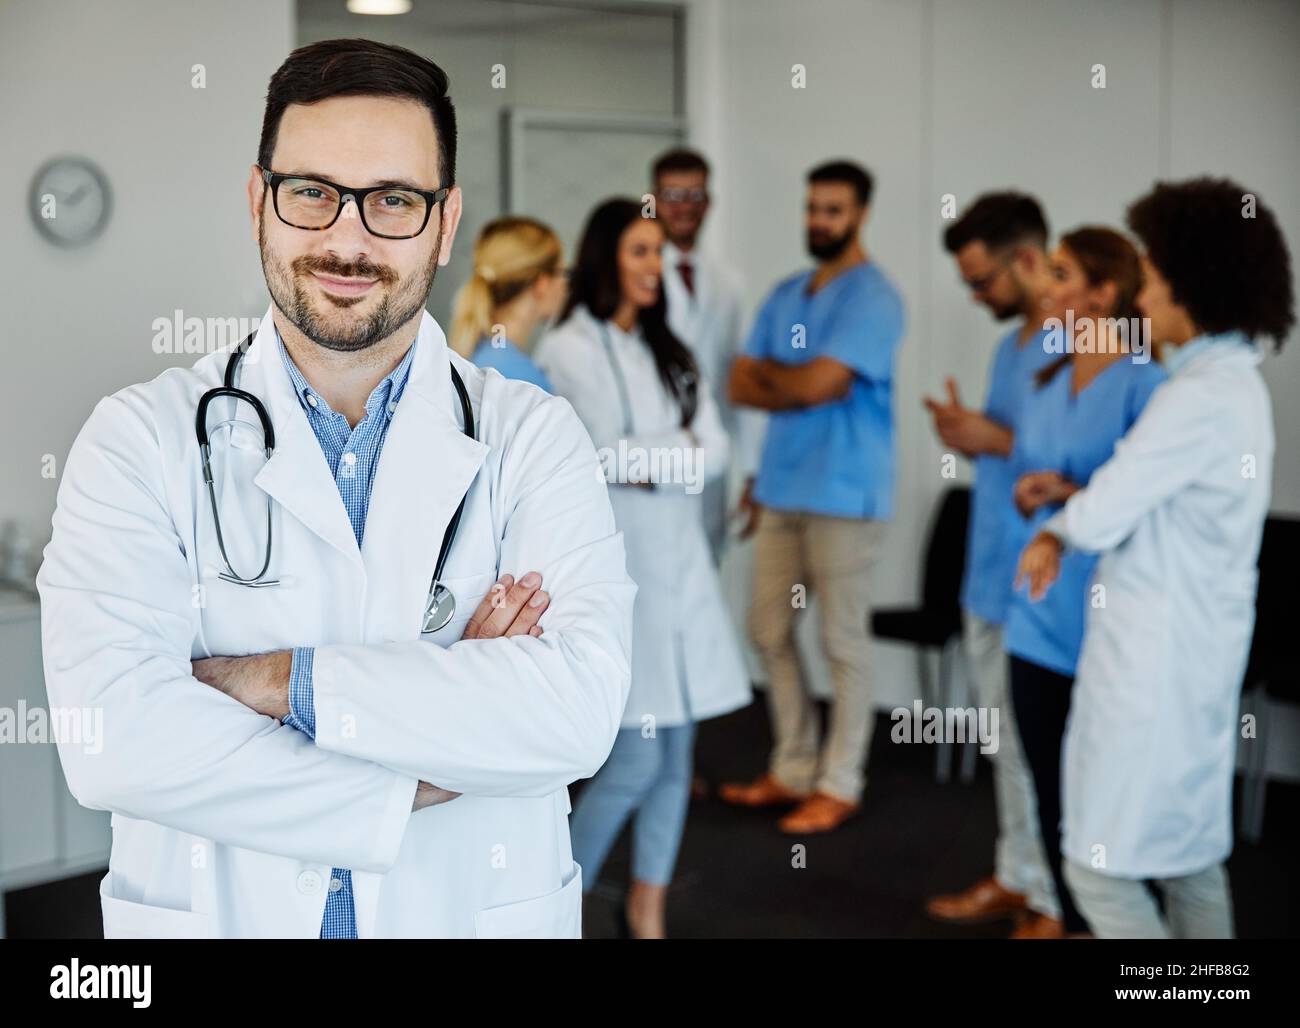 doctor medicine health care hospital specialist physician uniform portrait medical team clinic man smiling Stock Photo